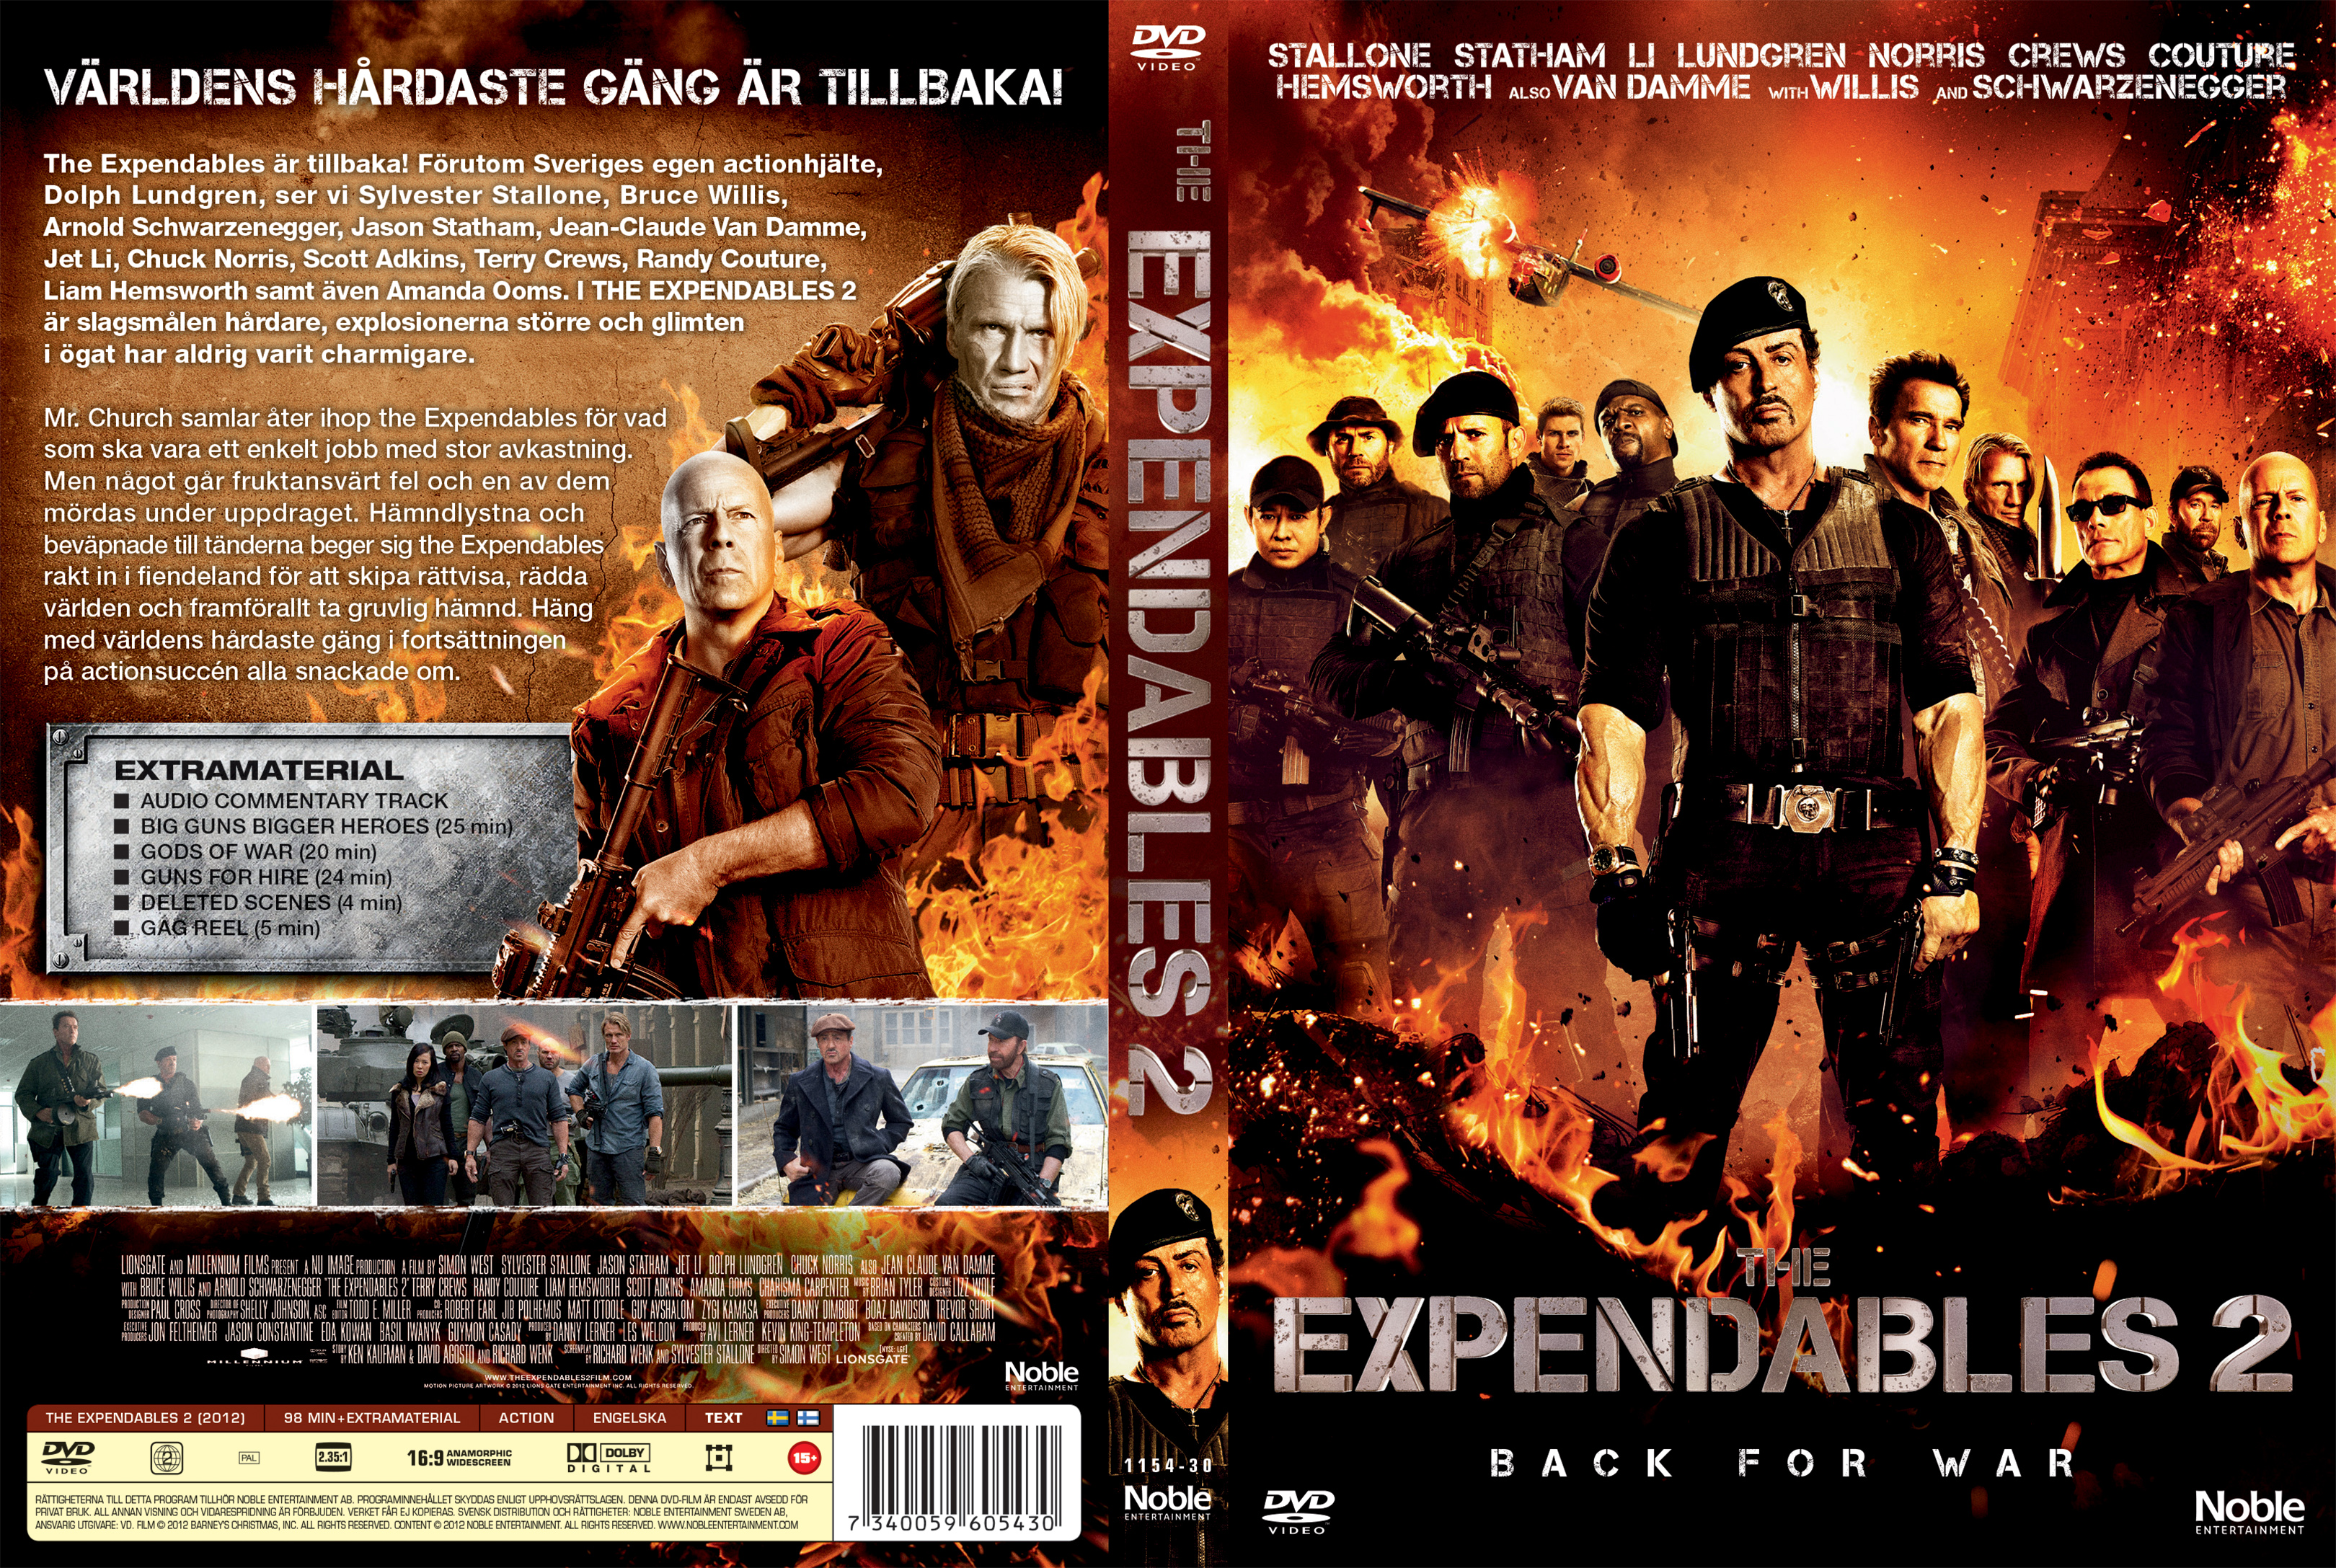 Читать неудержимый книга xiii. The Expendables 2, 2012 DVD Cover. The Expendables 3 обложка DVD. Chuck Norris in Неудержимые 2 the Expendables 2, 2012.